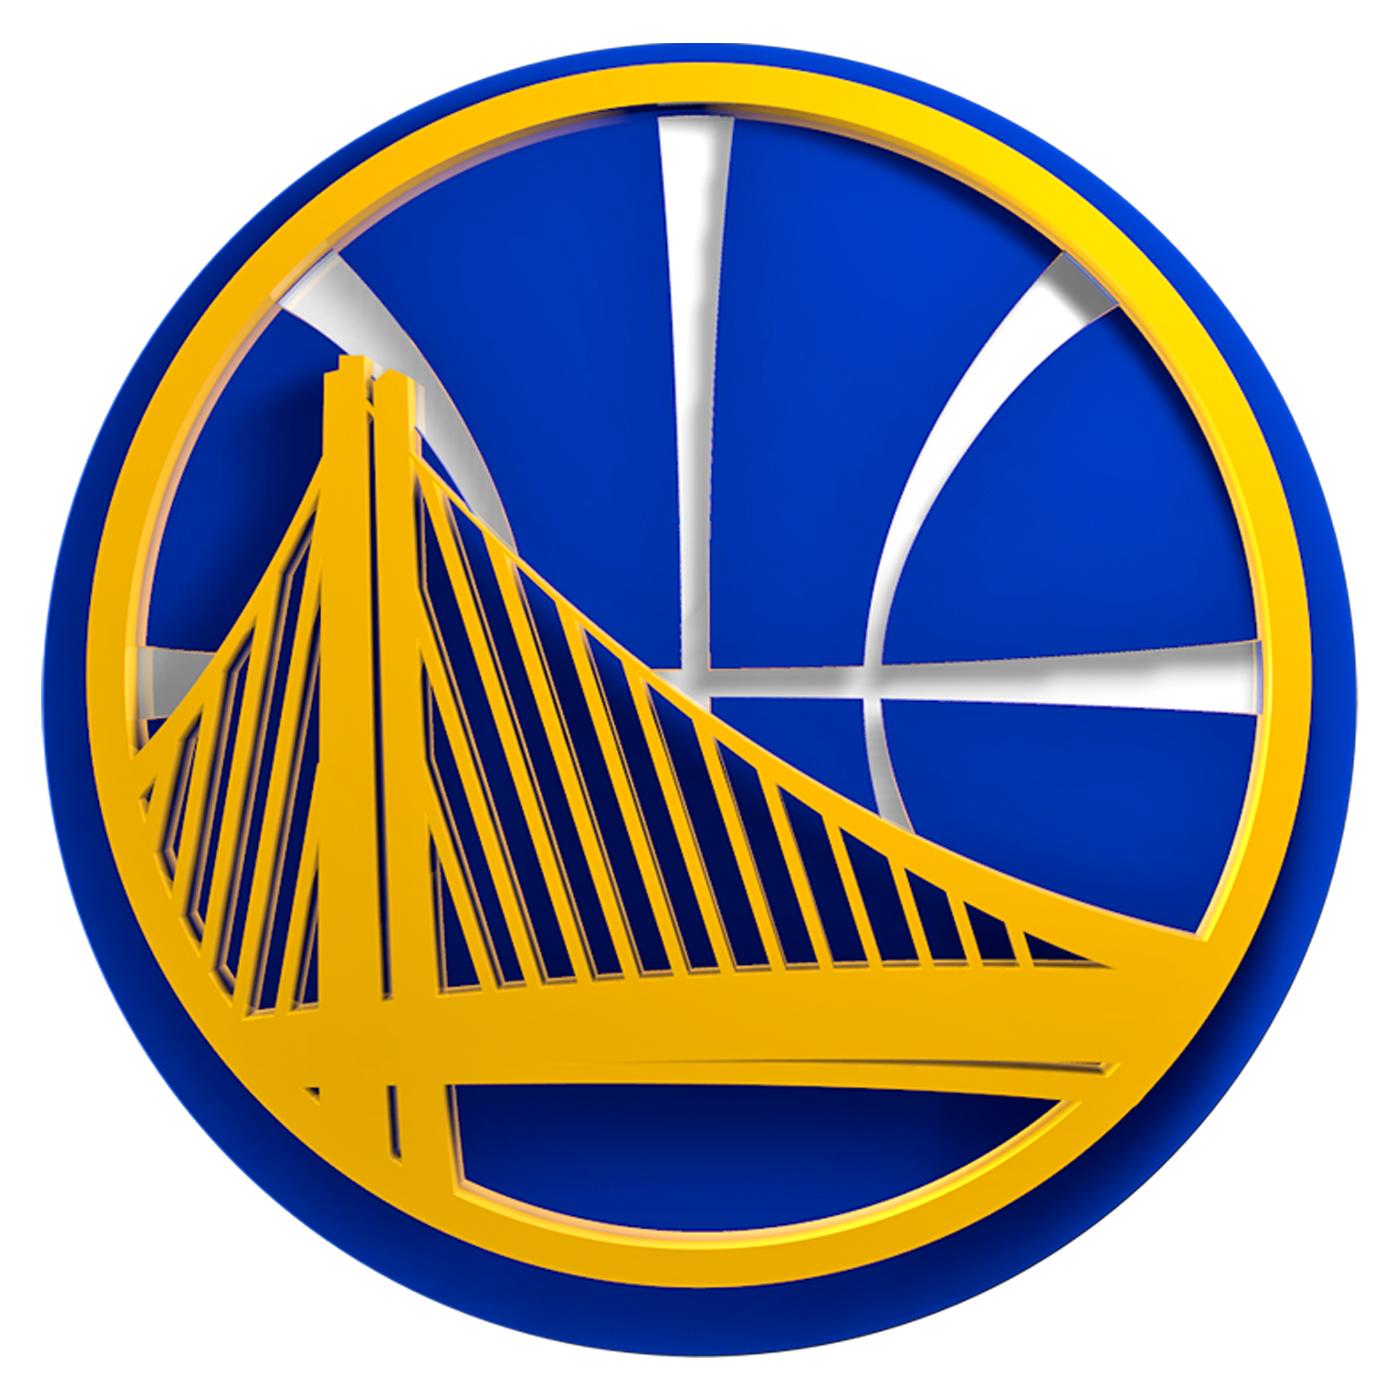 Golden State Warriors Logo - Golden State Warriors | The Official Site of the Golden State Warriors